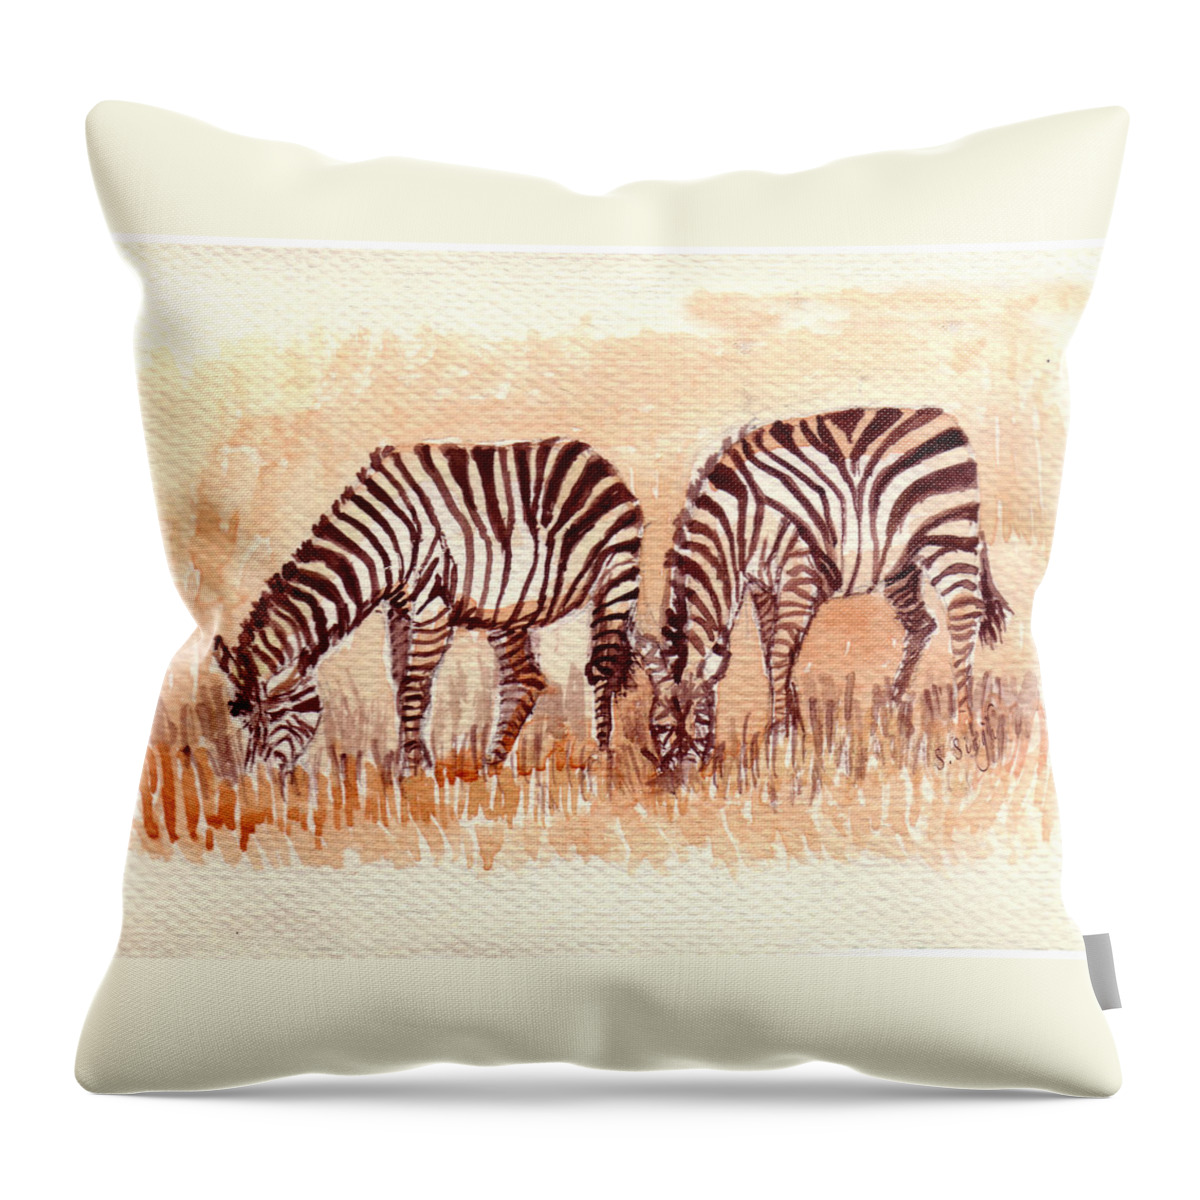 Animal Art Throw Pillow featuring the painting Stripe Buddies by Sarabjit Singh